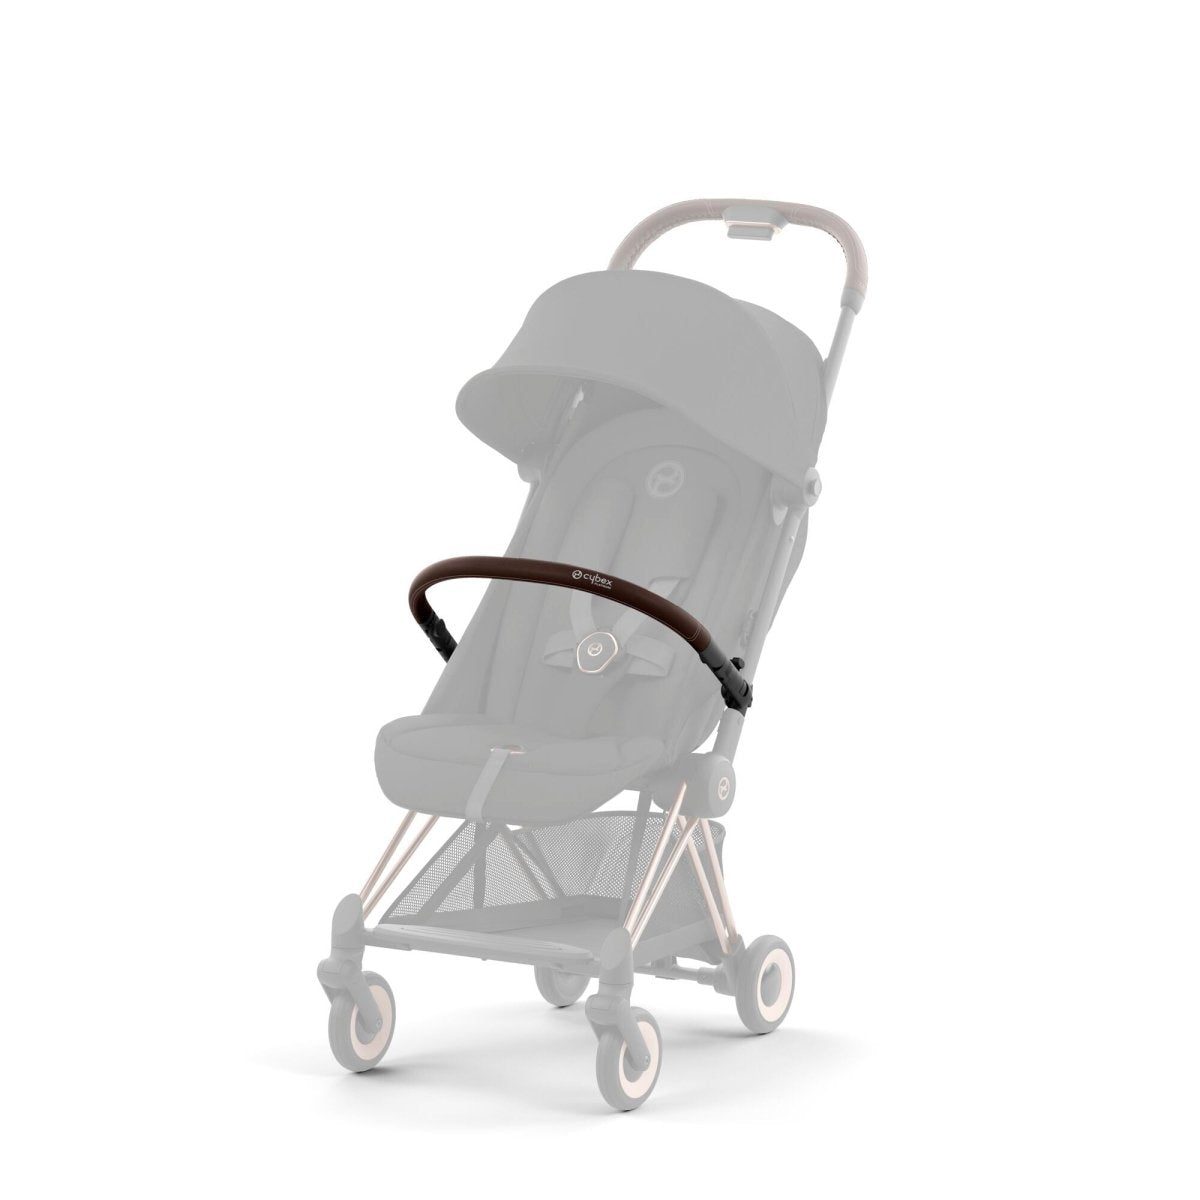 Bumperbar coche de paseo Cöya - Cybex Gold-Mini Nuts - Expertos en sillas de auto y coches de paseo para bebés